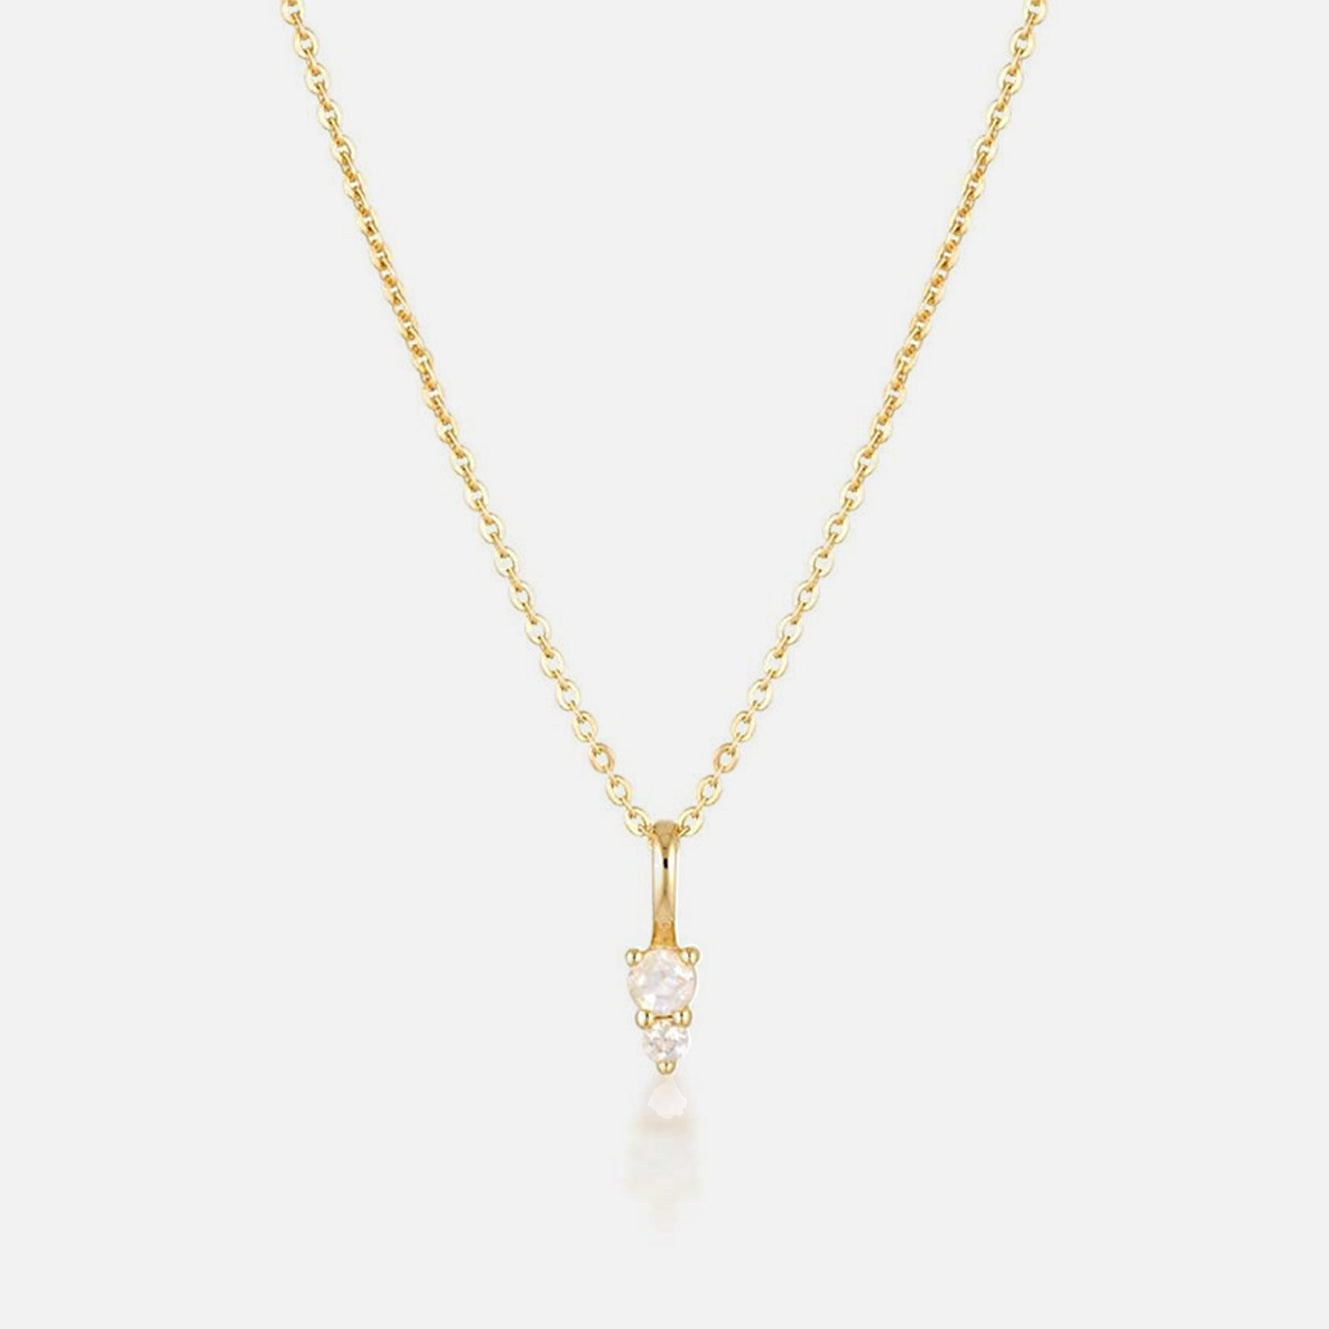 Linda Tahija - Binary Gemstone Necklace - Gold Plated - Moonstone